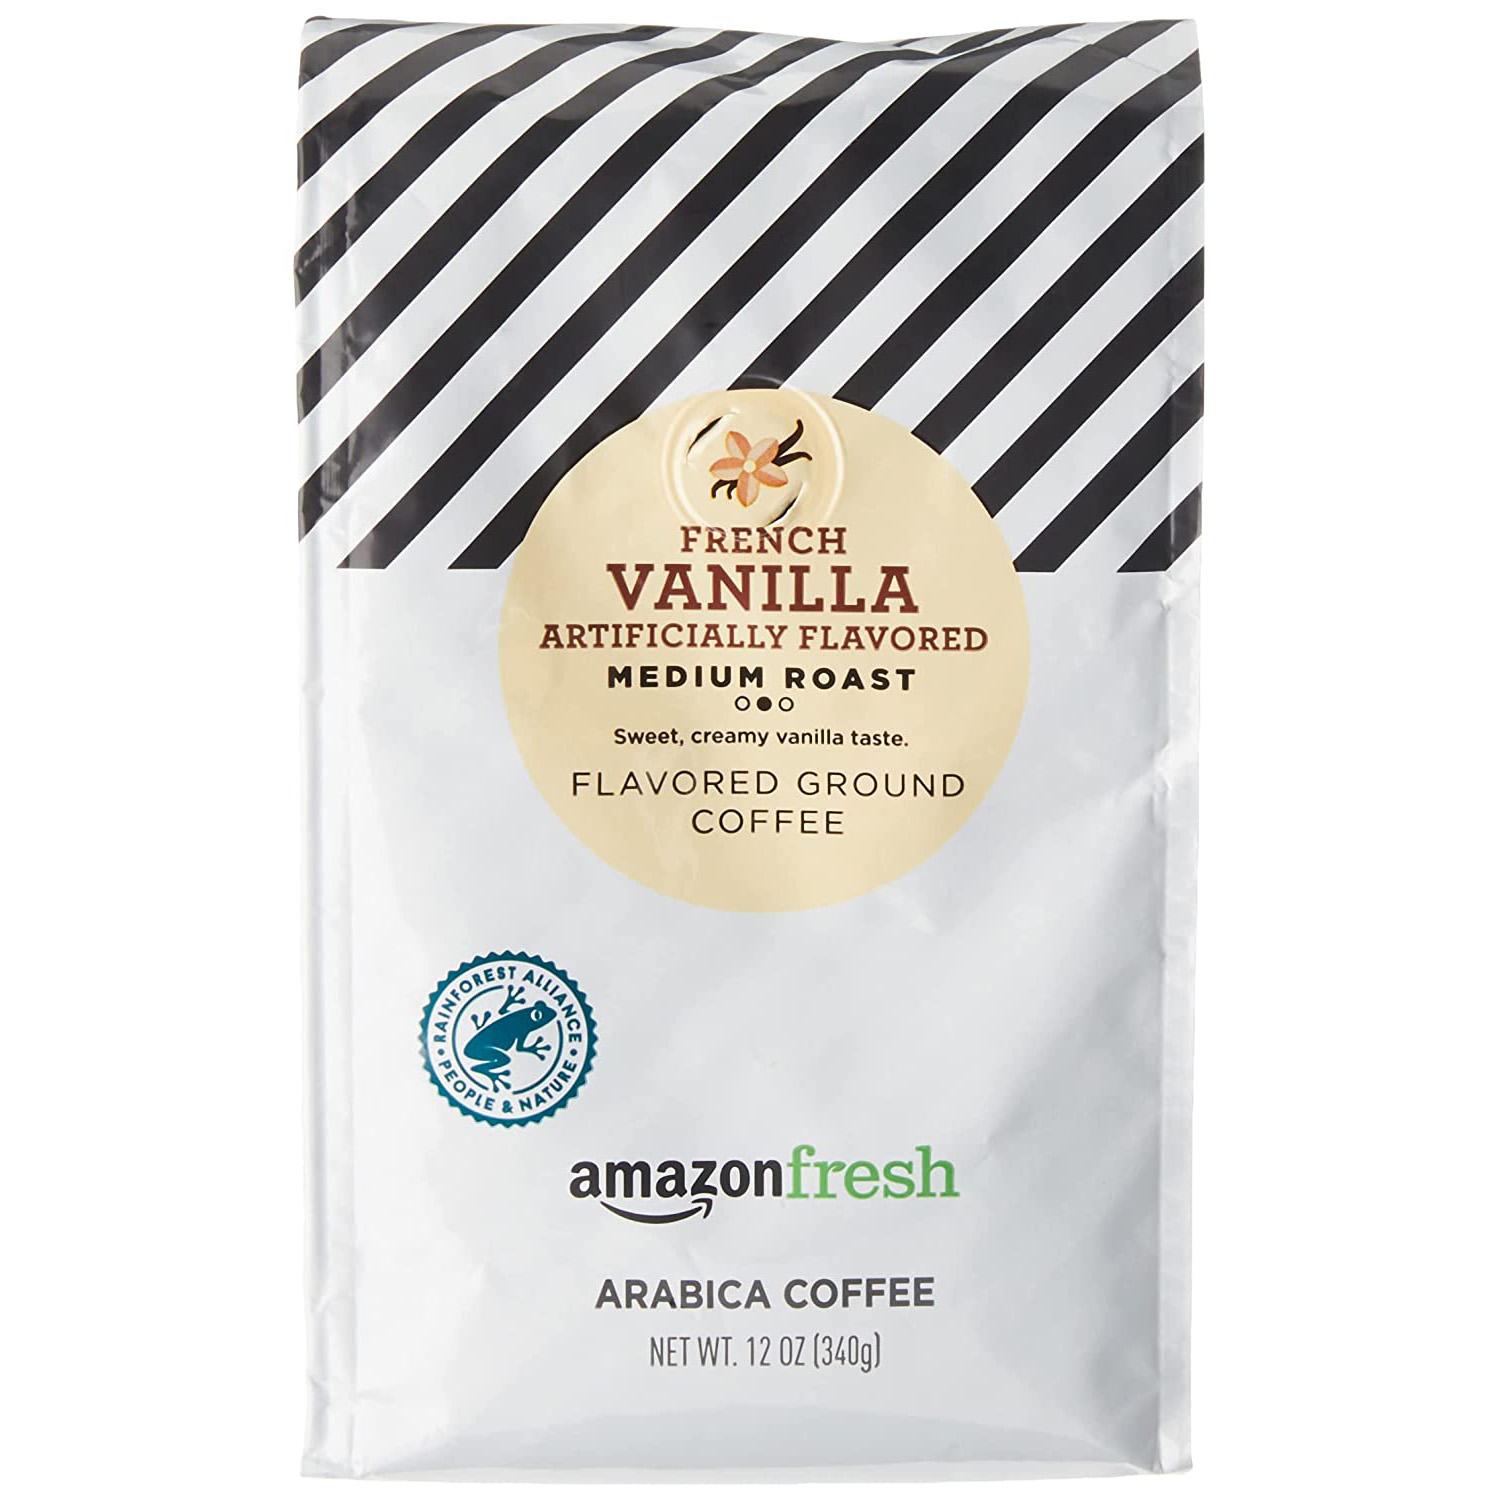 AmazonFresh French Vanilla Flavored Medium Roast Ground Coffee for $4.09 Shipped